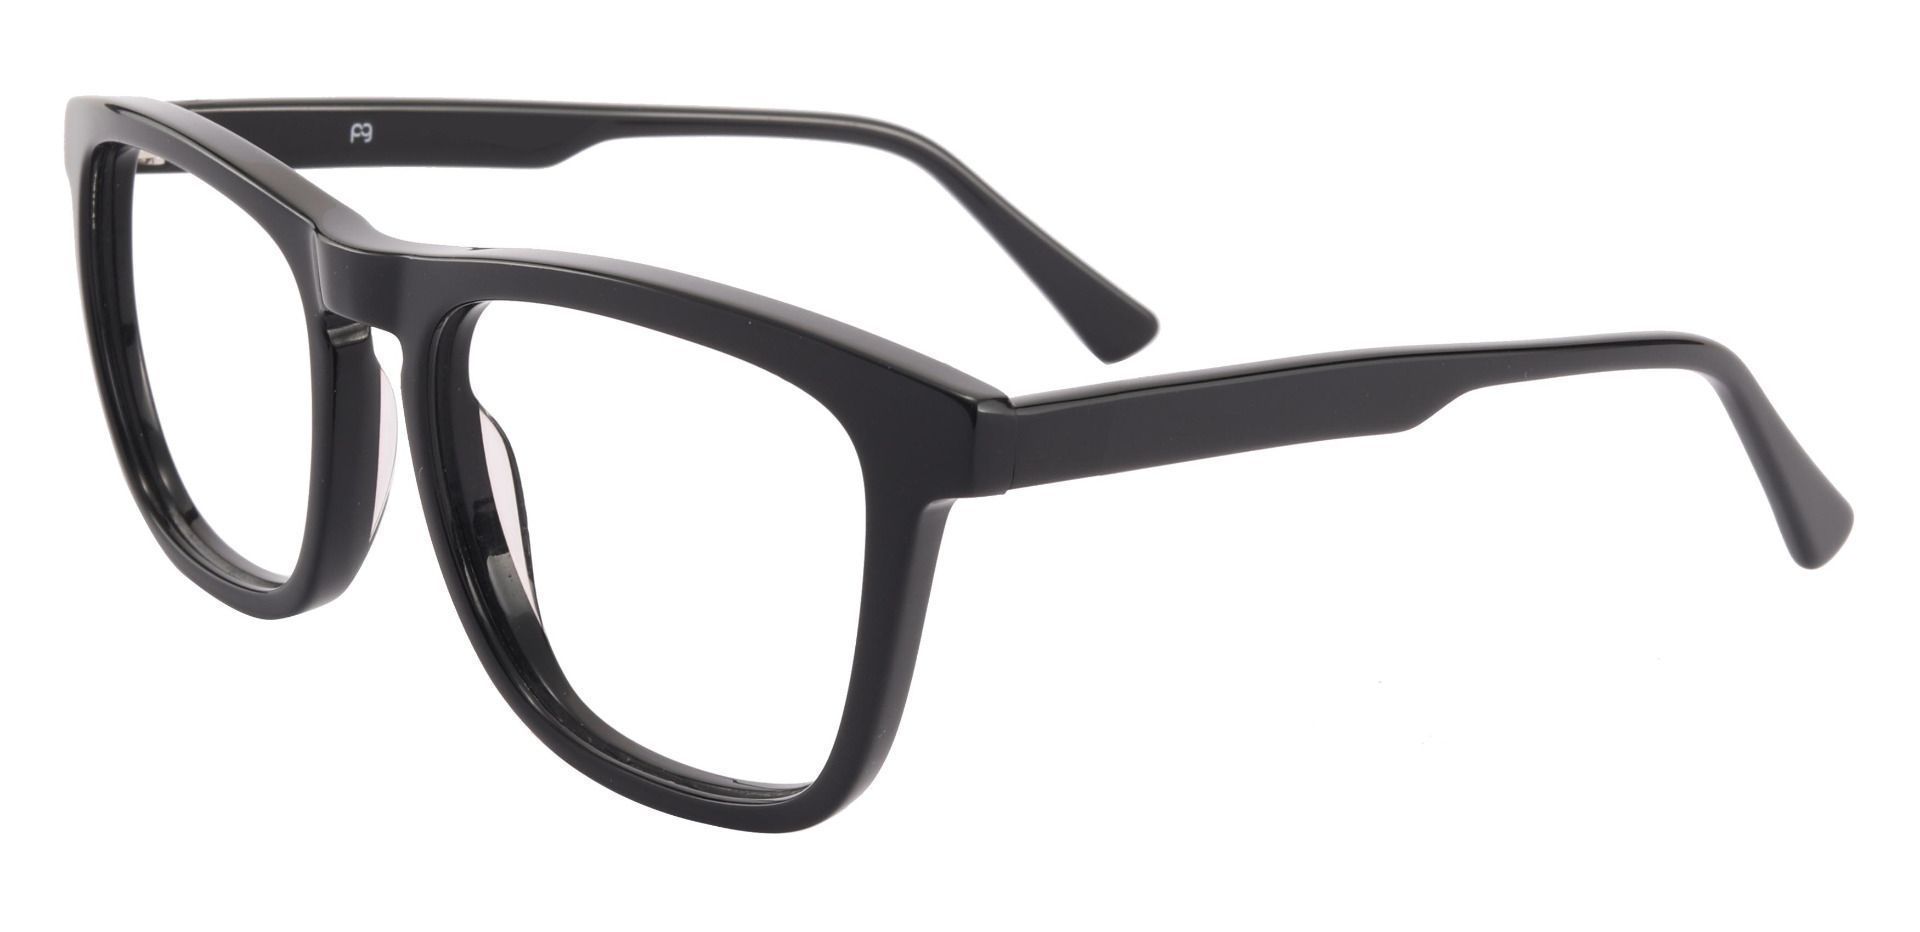 Reno Square Progressive Glasses - Black